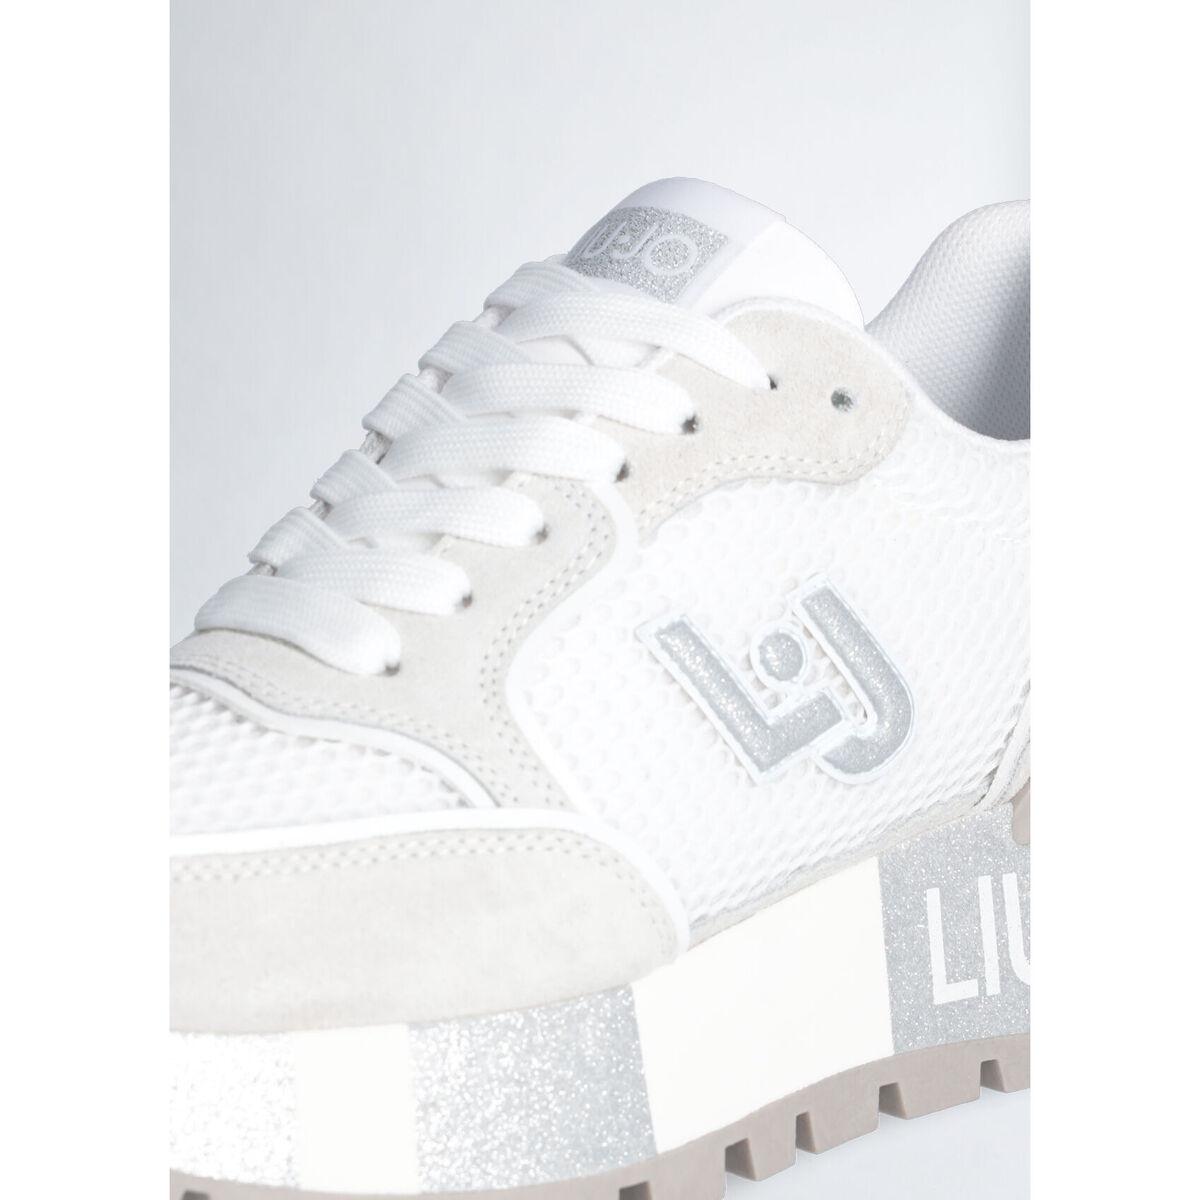 Liu Jo Blanc Sneakers à plateforme en daim et maille filet ZGwCx5gH